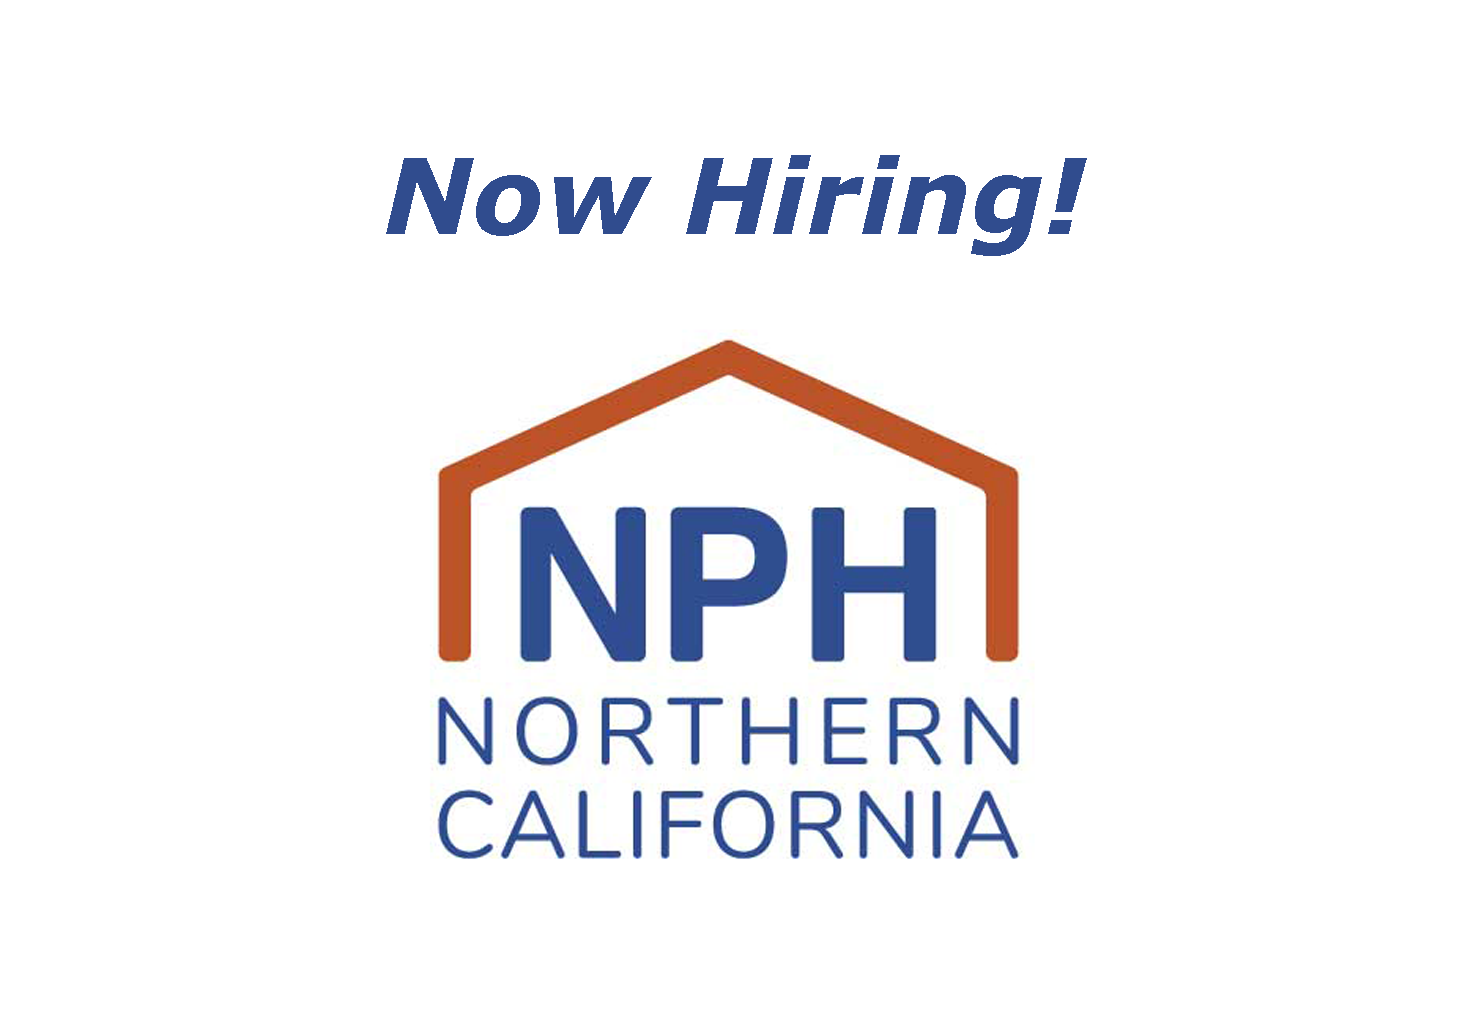 NPH logo with Now Hiring written above